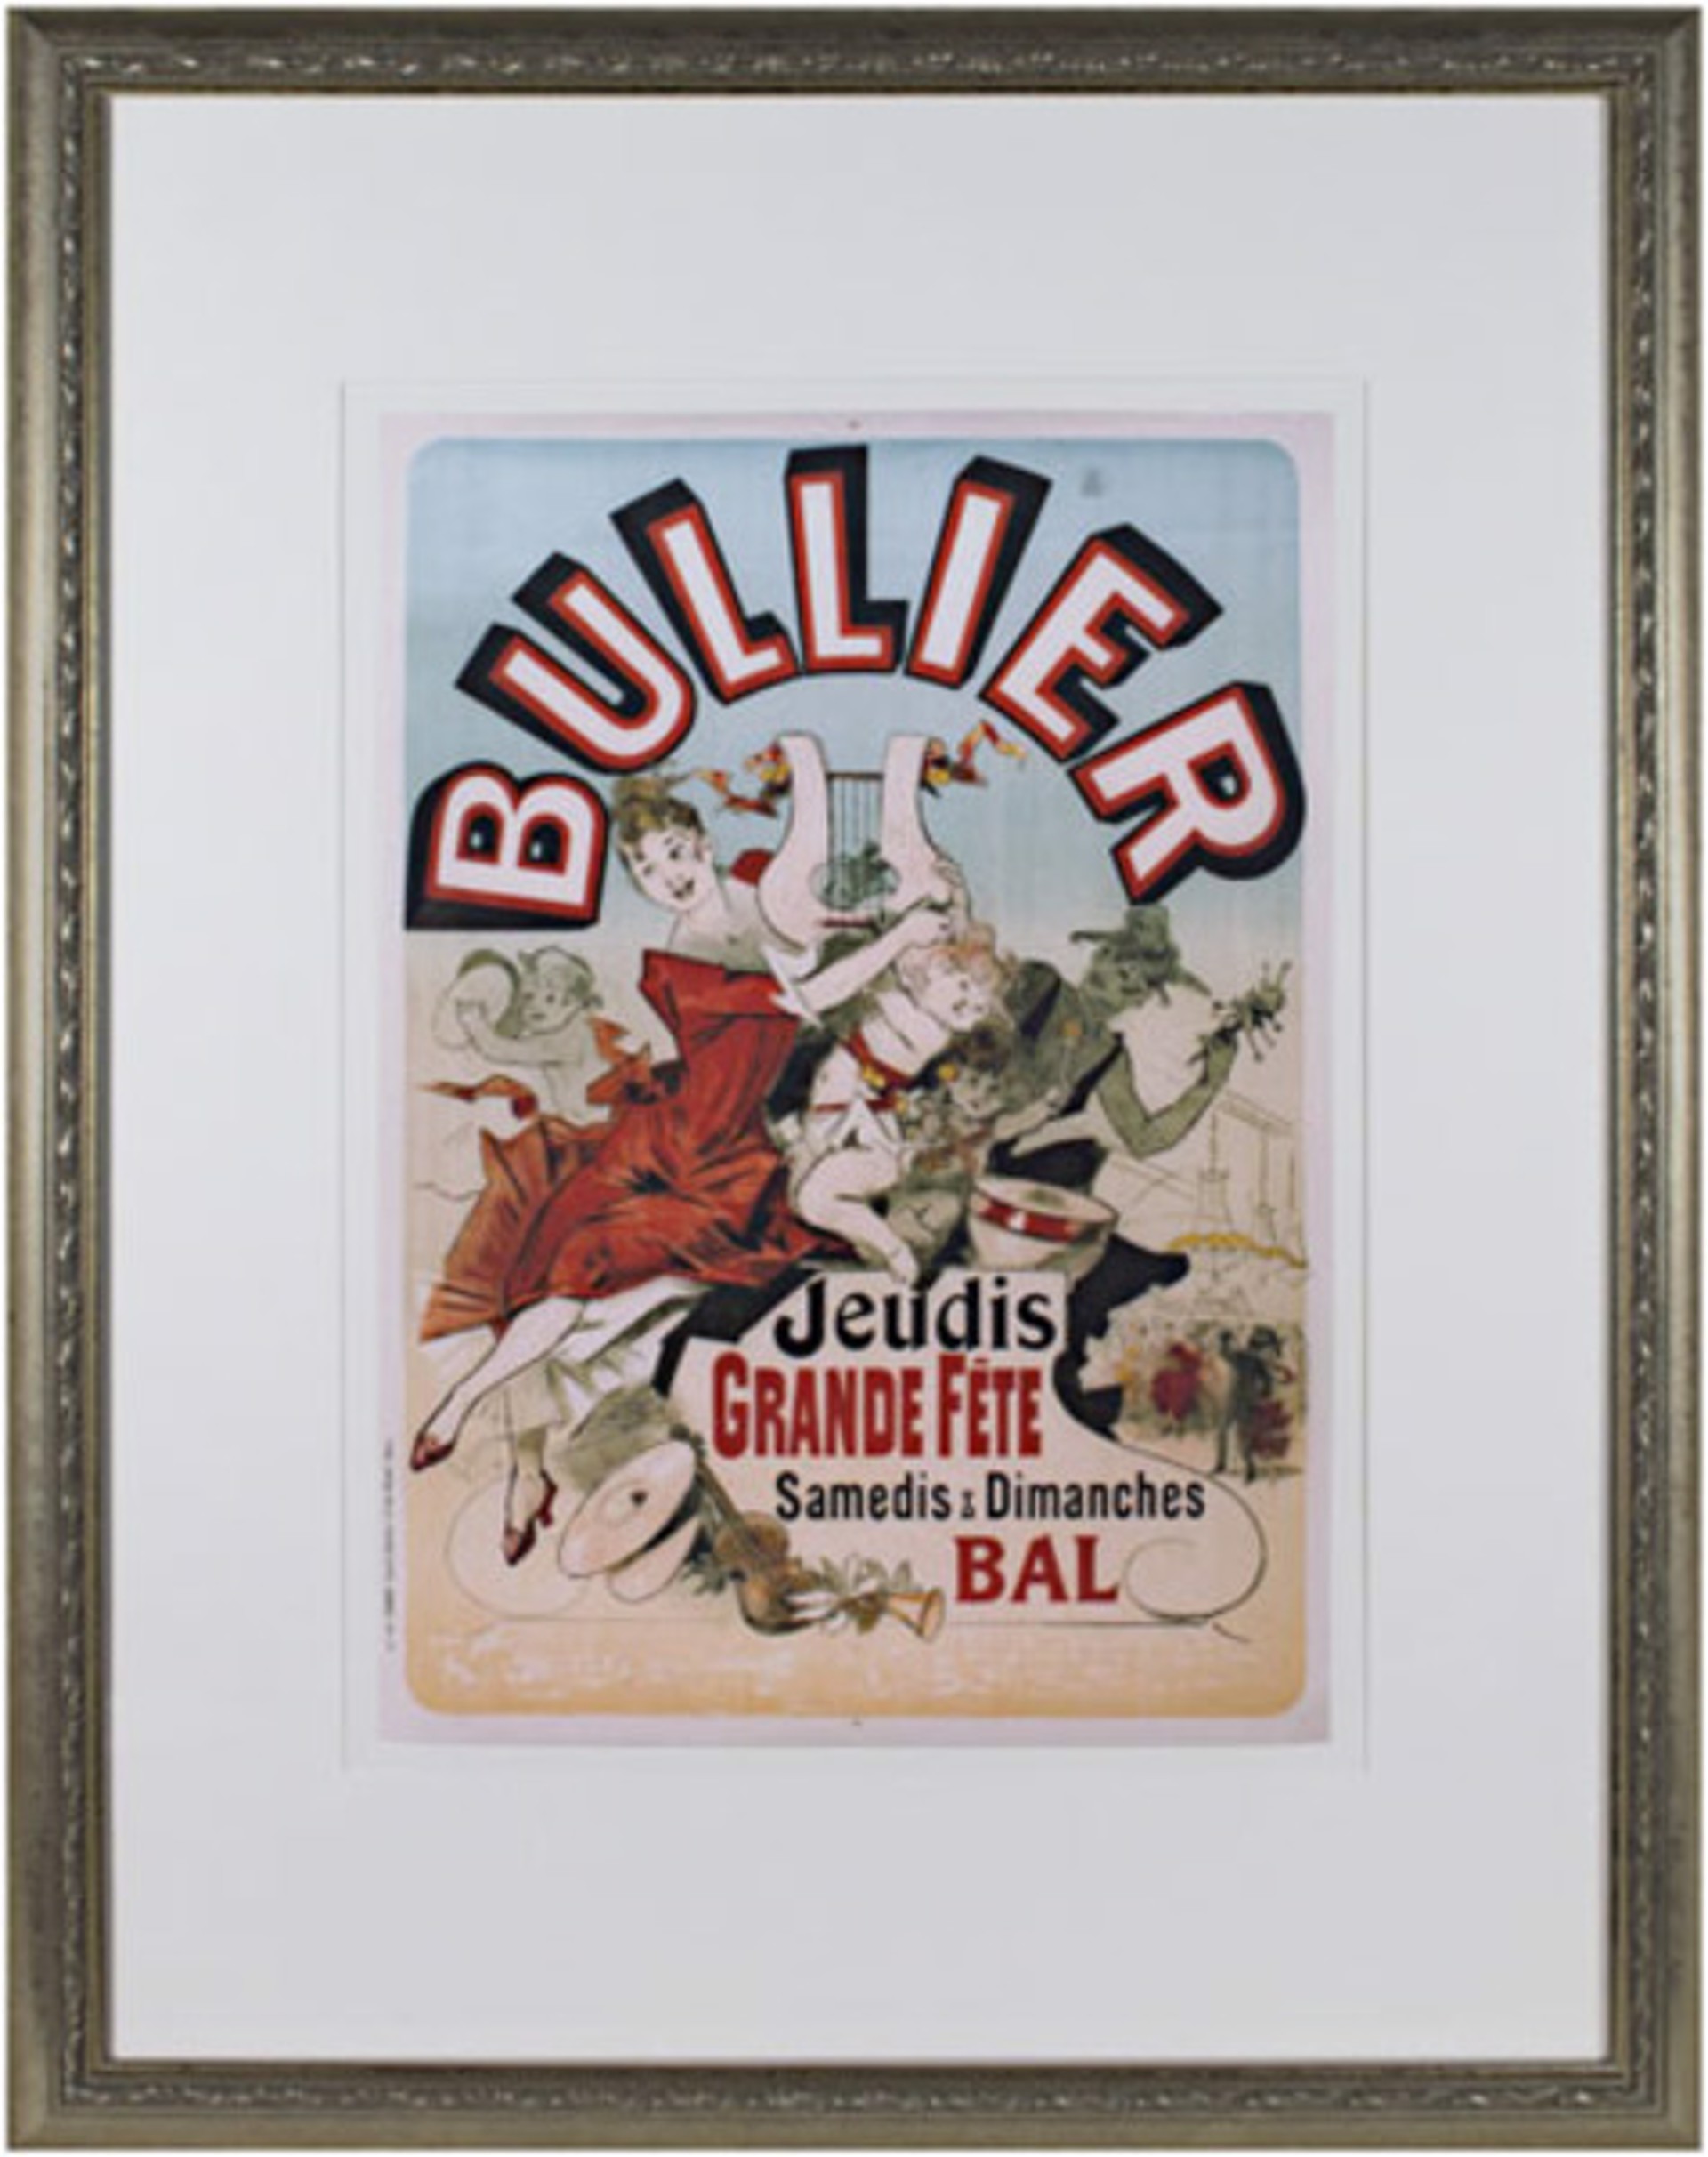 Bullier - Jeudis Grande Fete by Jules Cheret